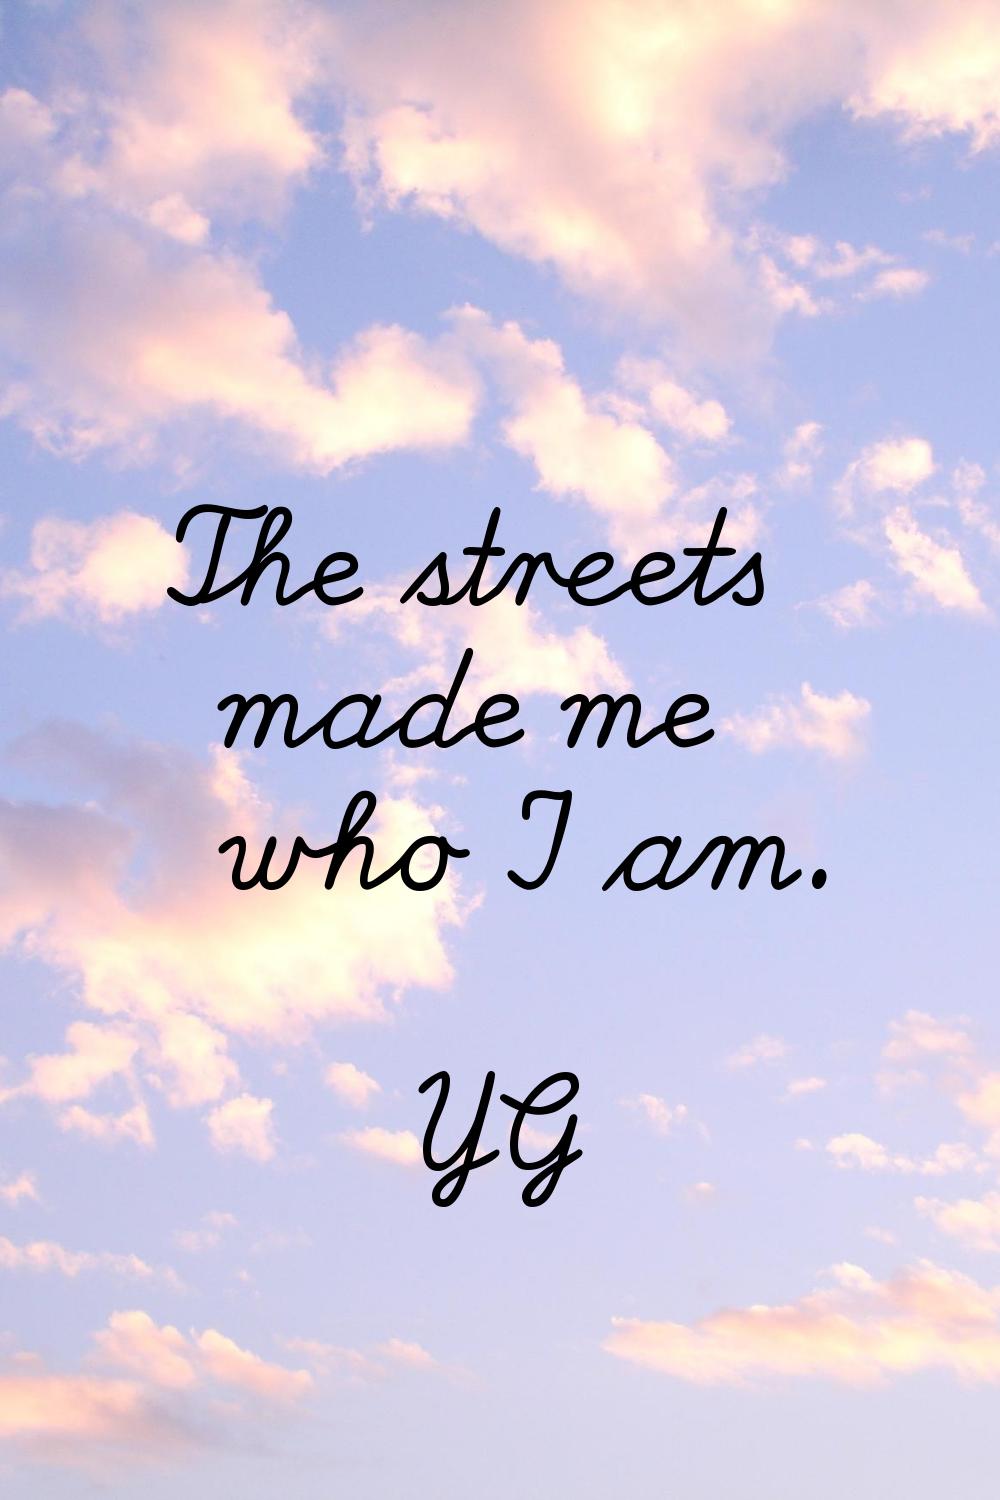 The streets made me who I am.